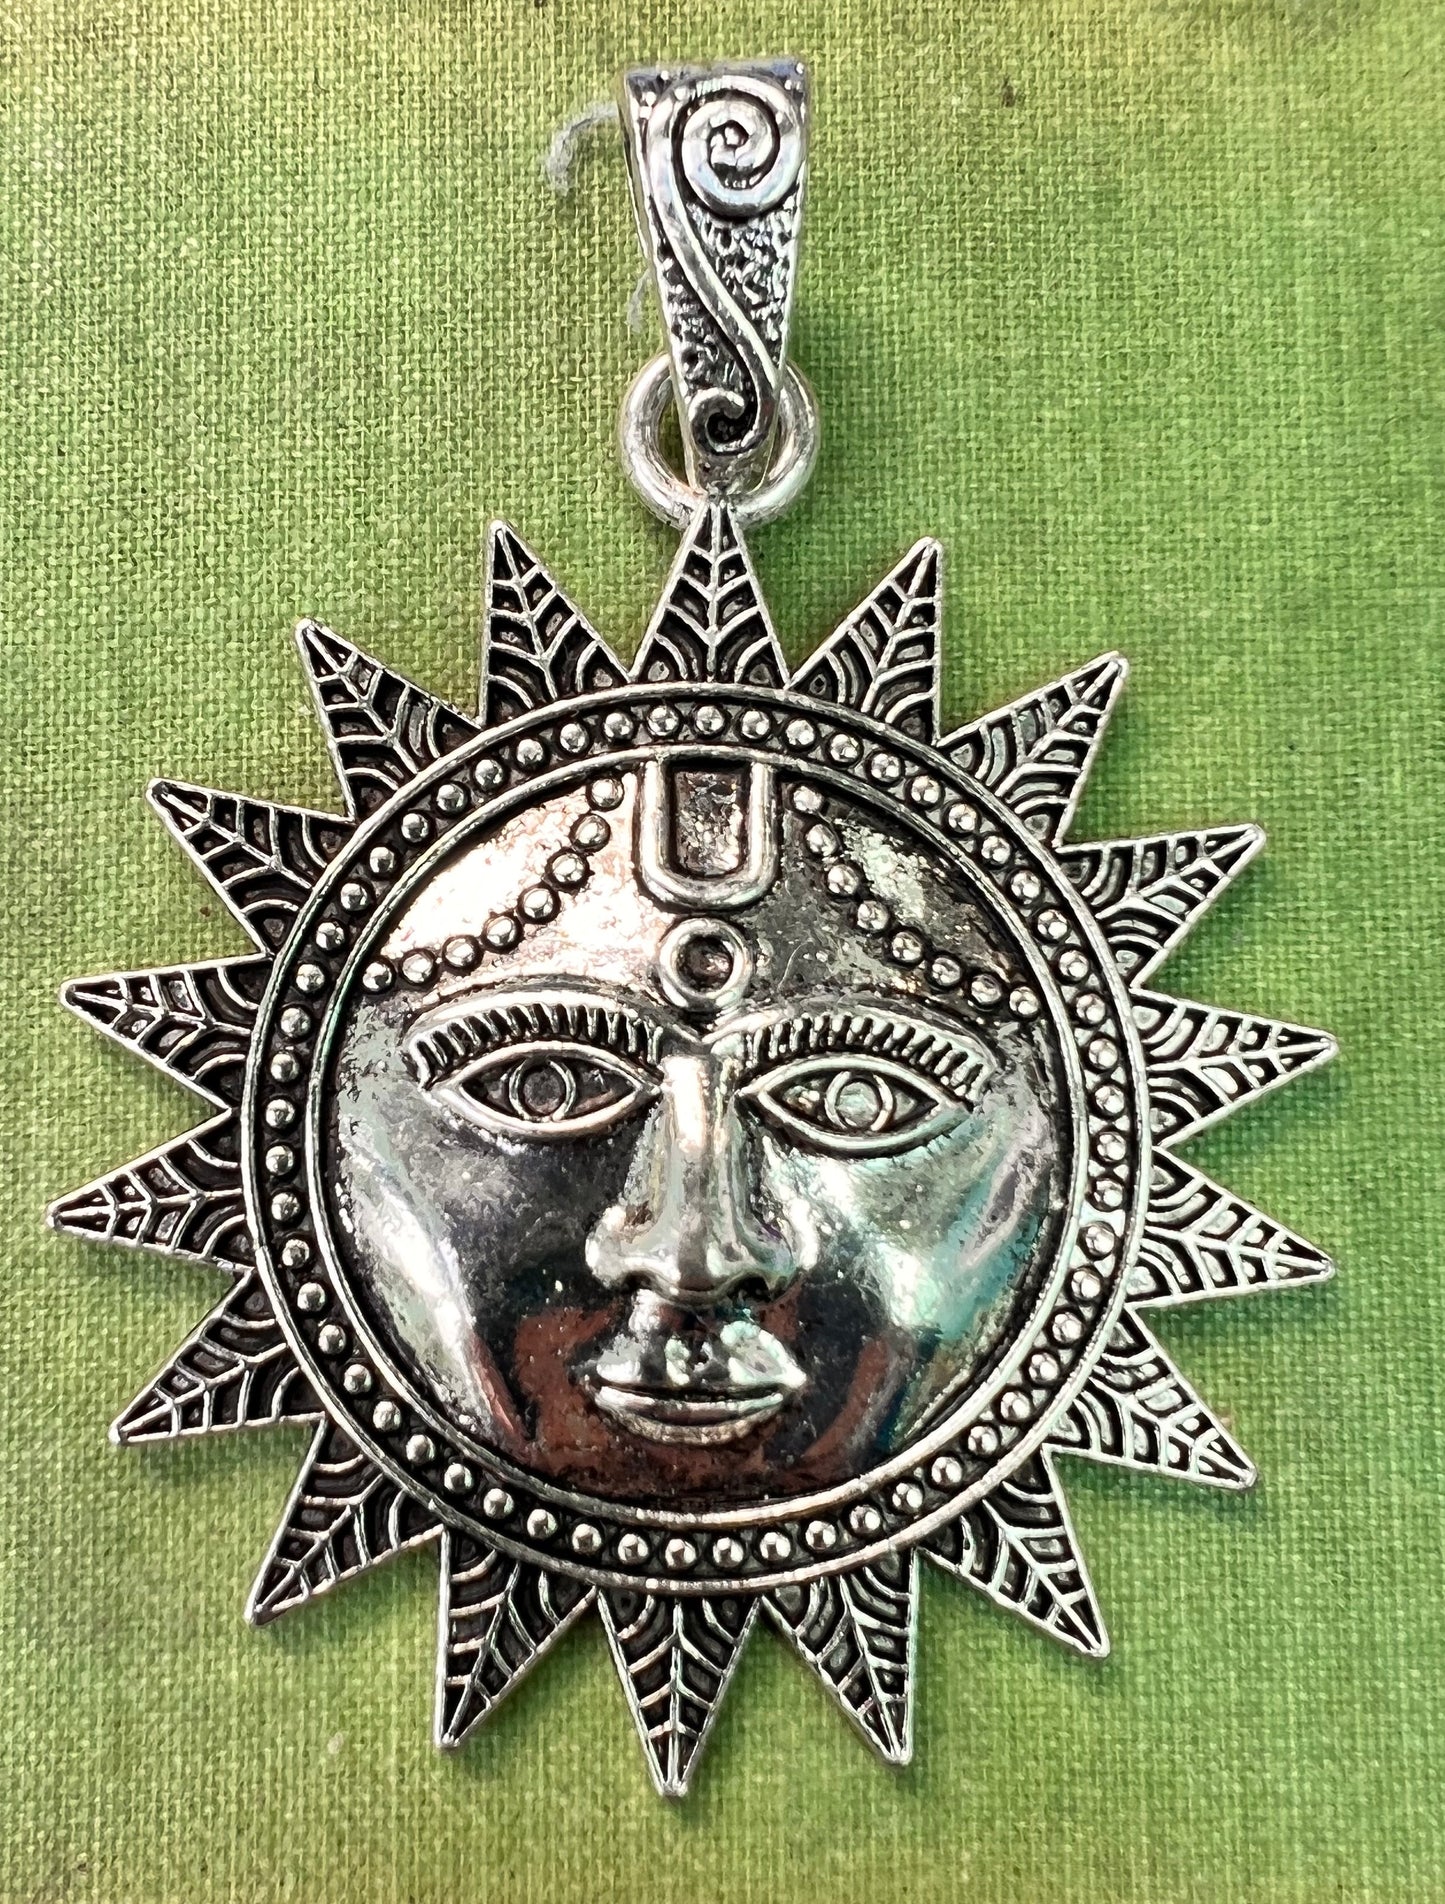 Big 6cm Star Face Silver Tone Pendant or Necklace